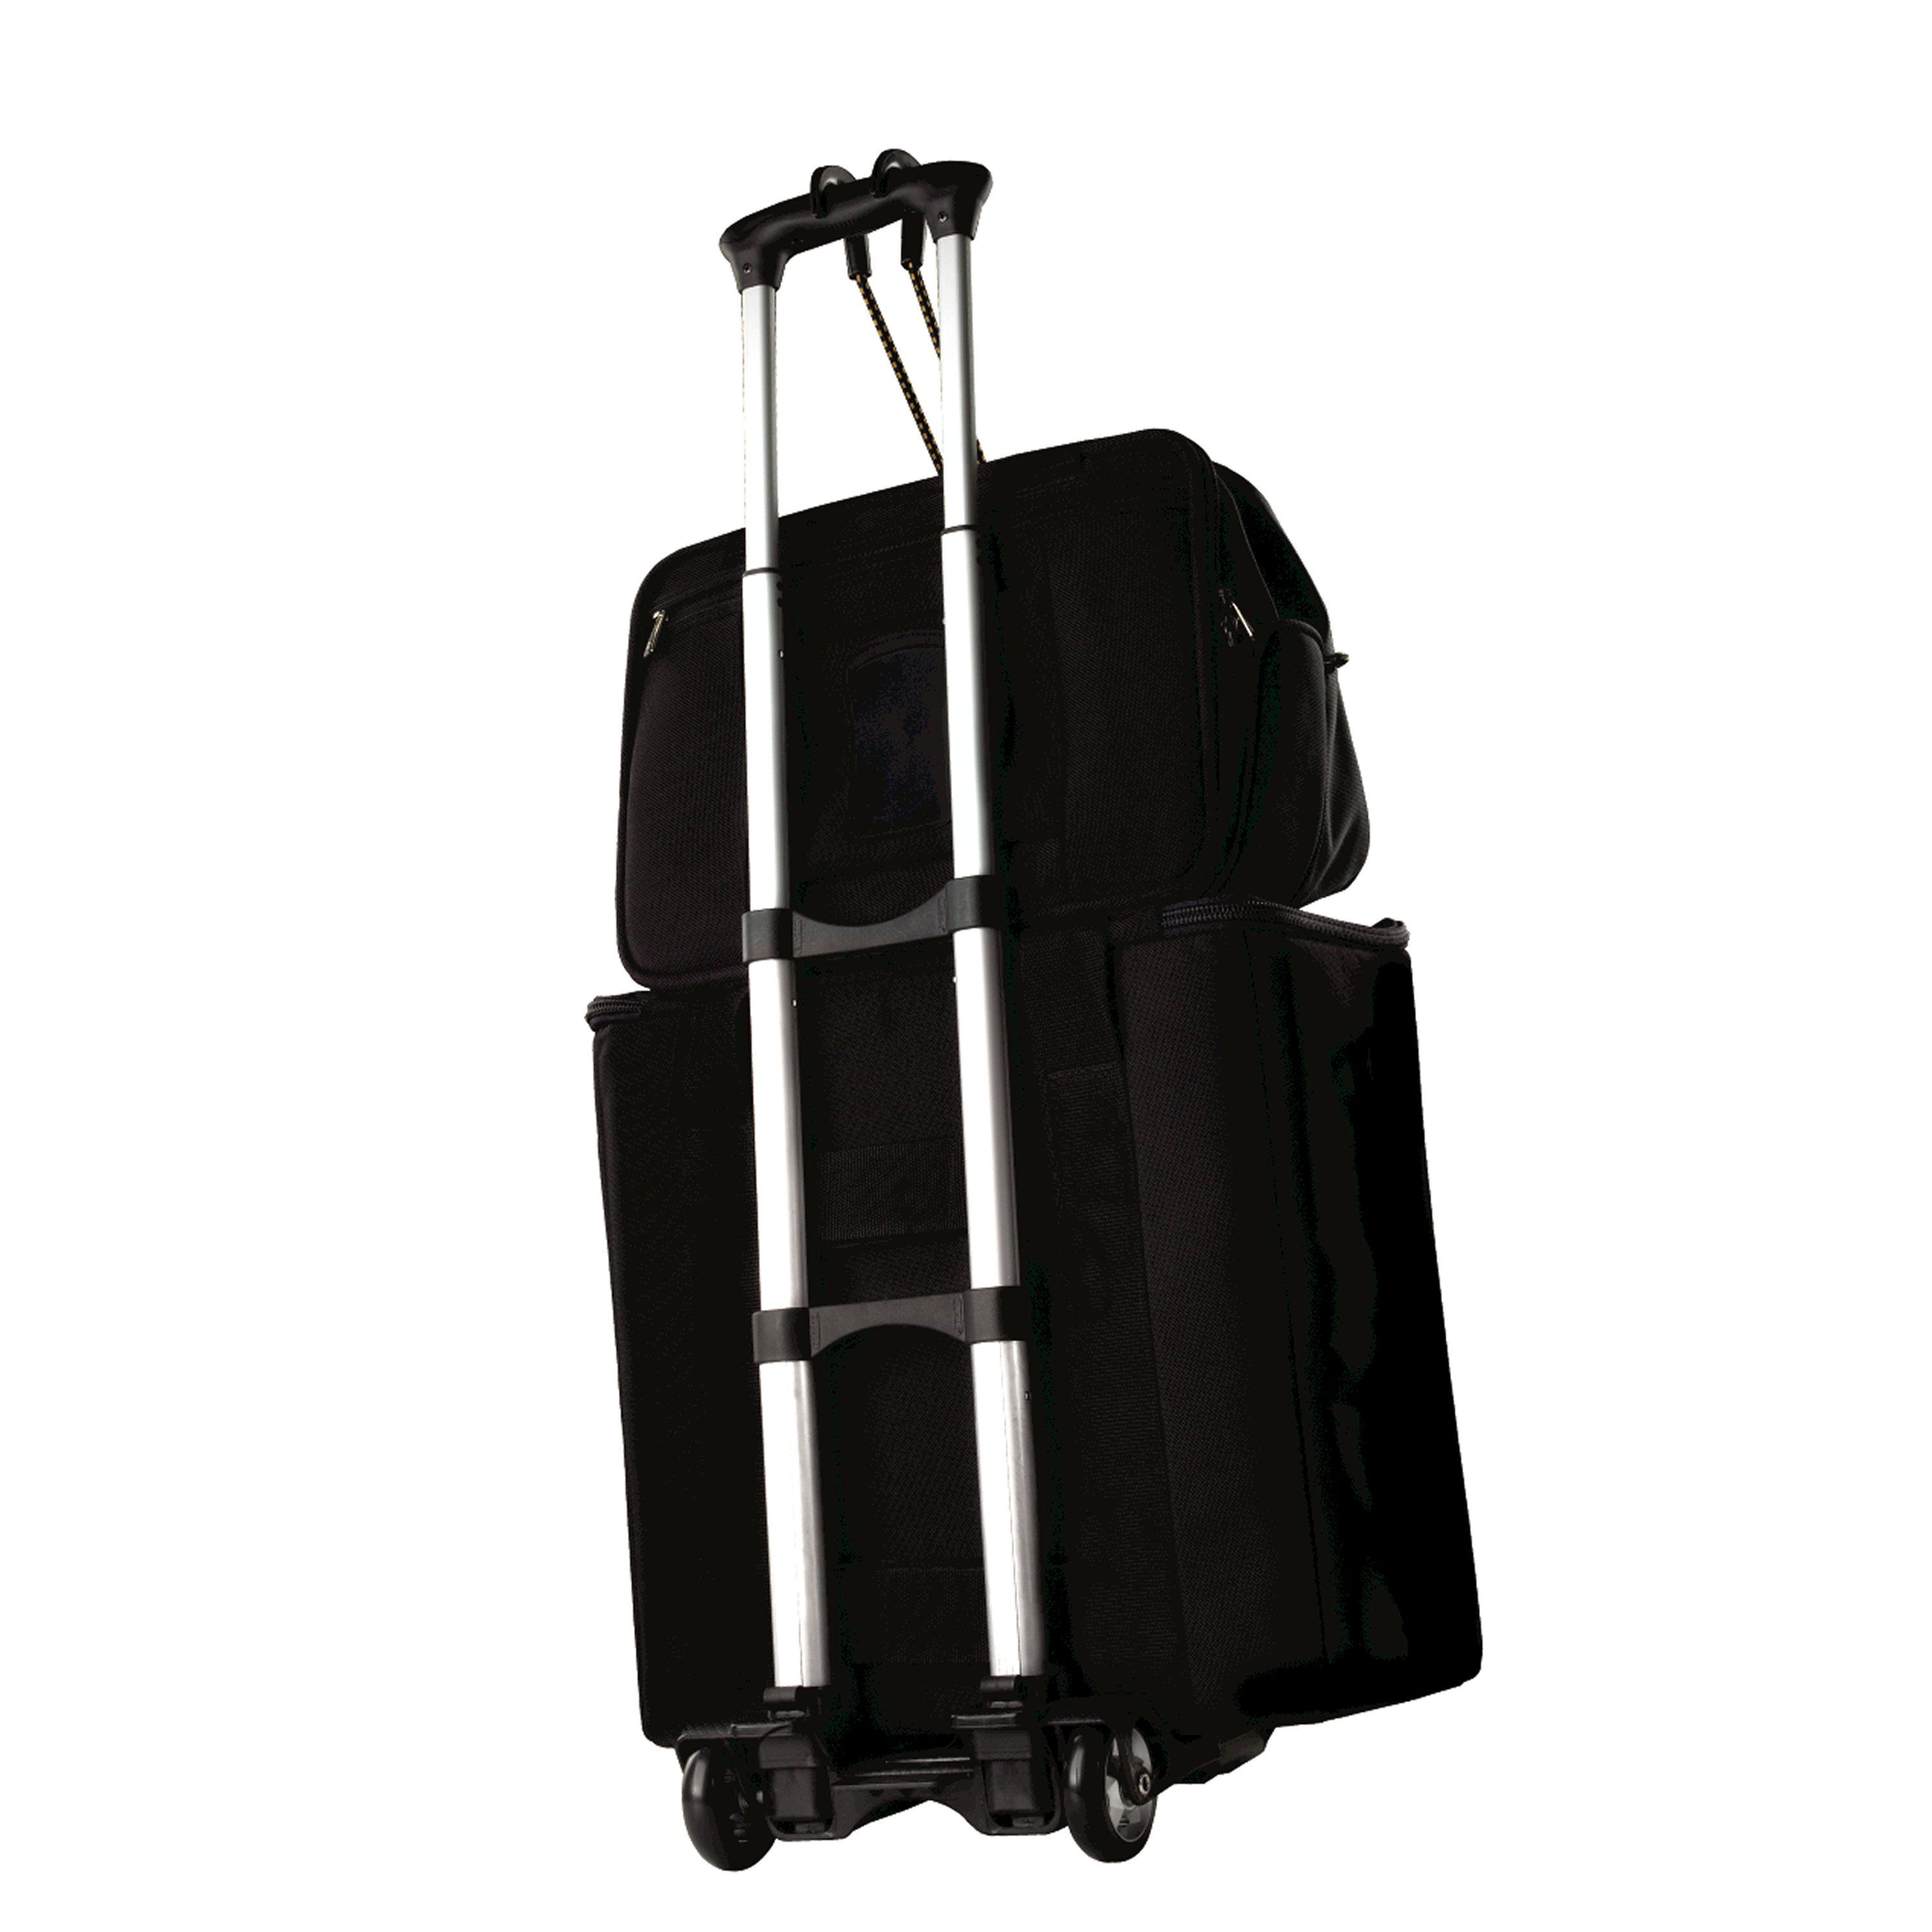 Samsonite Compact Folding Luggage Cart, Black, One Size - 1